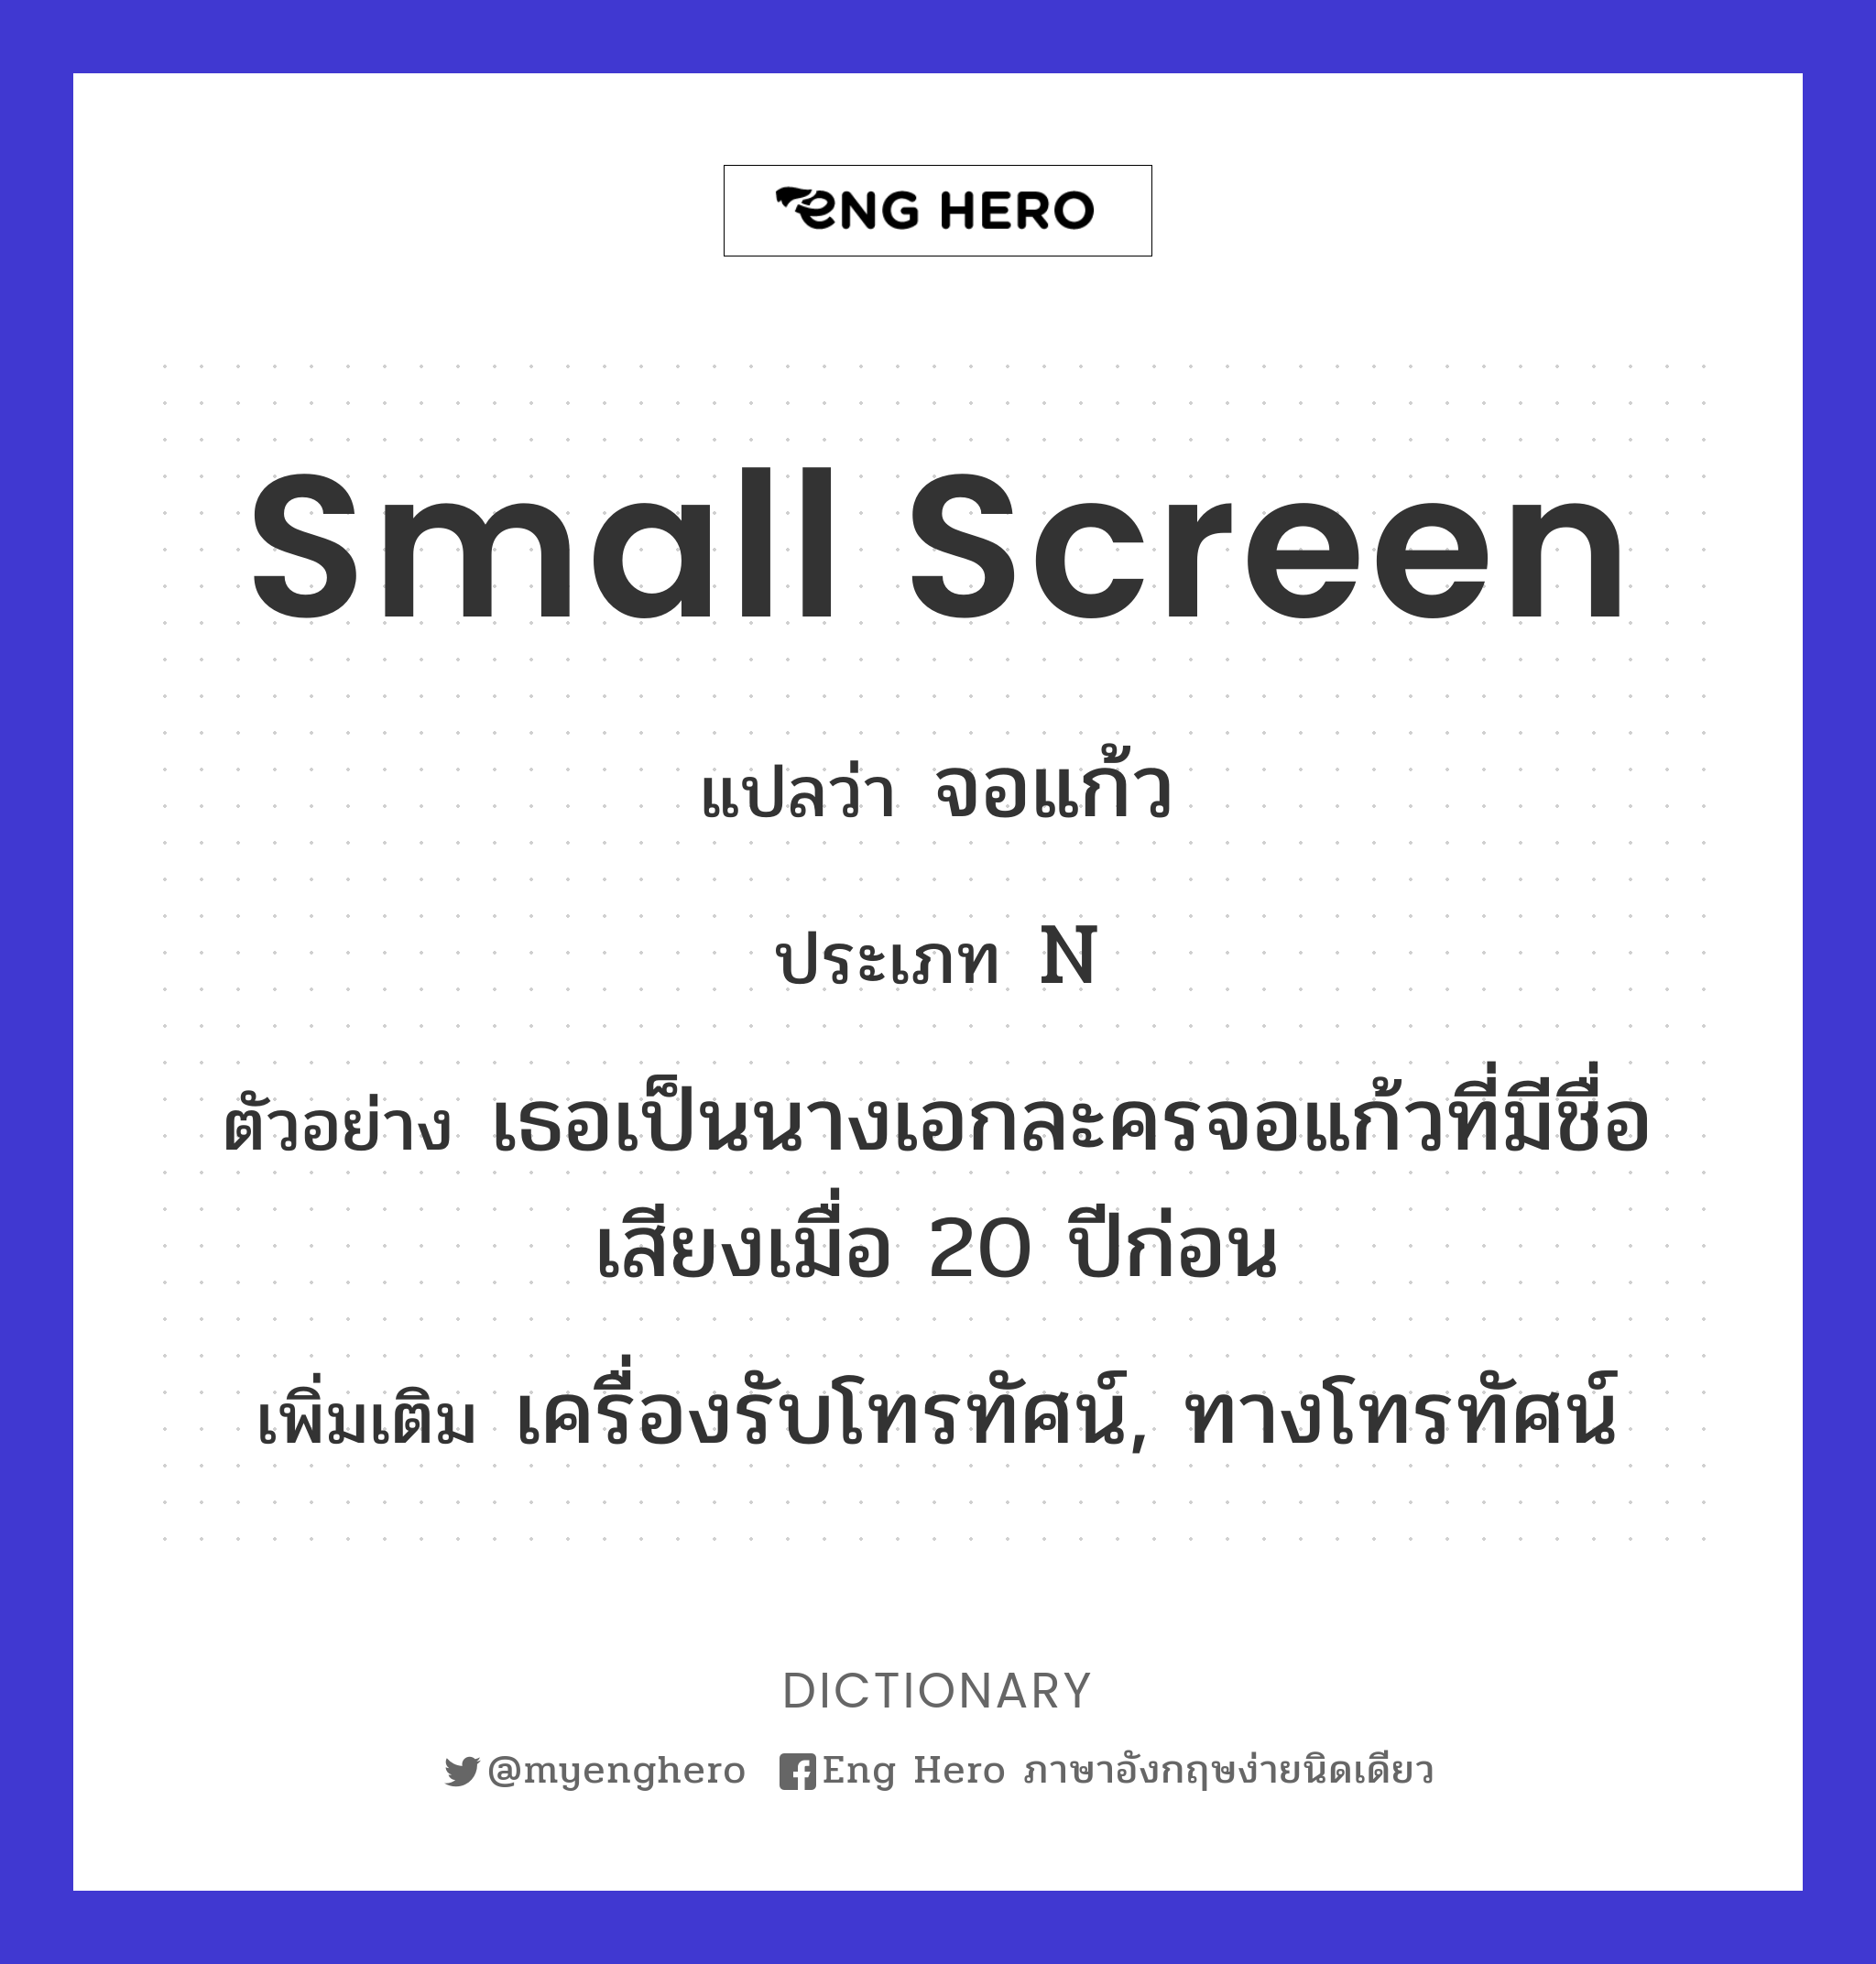 small screen